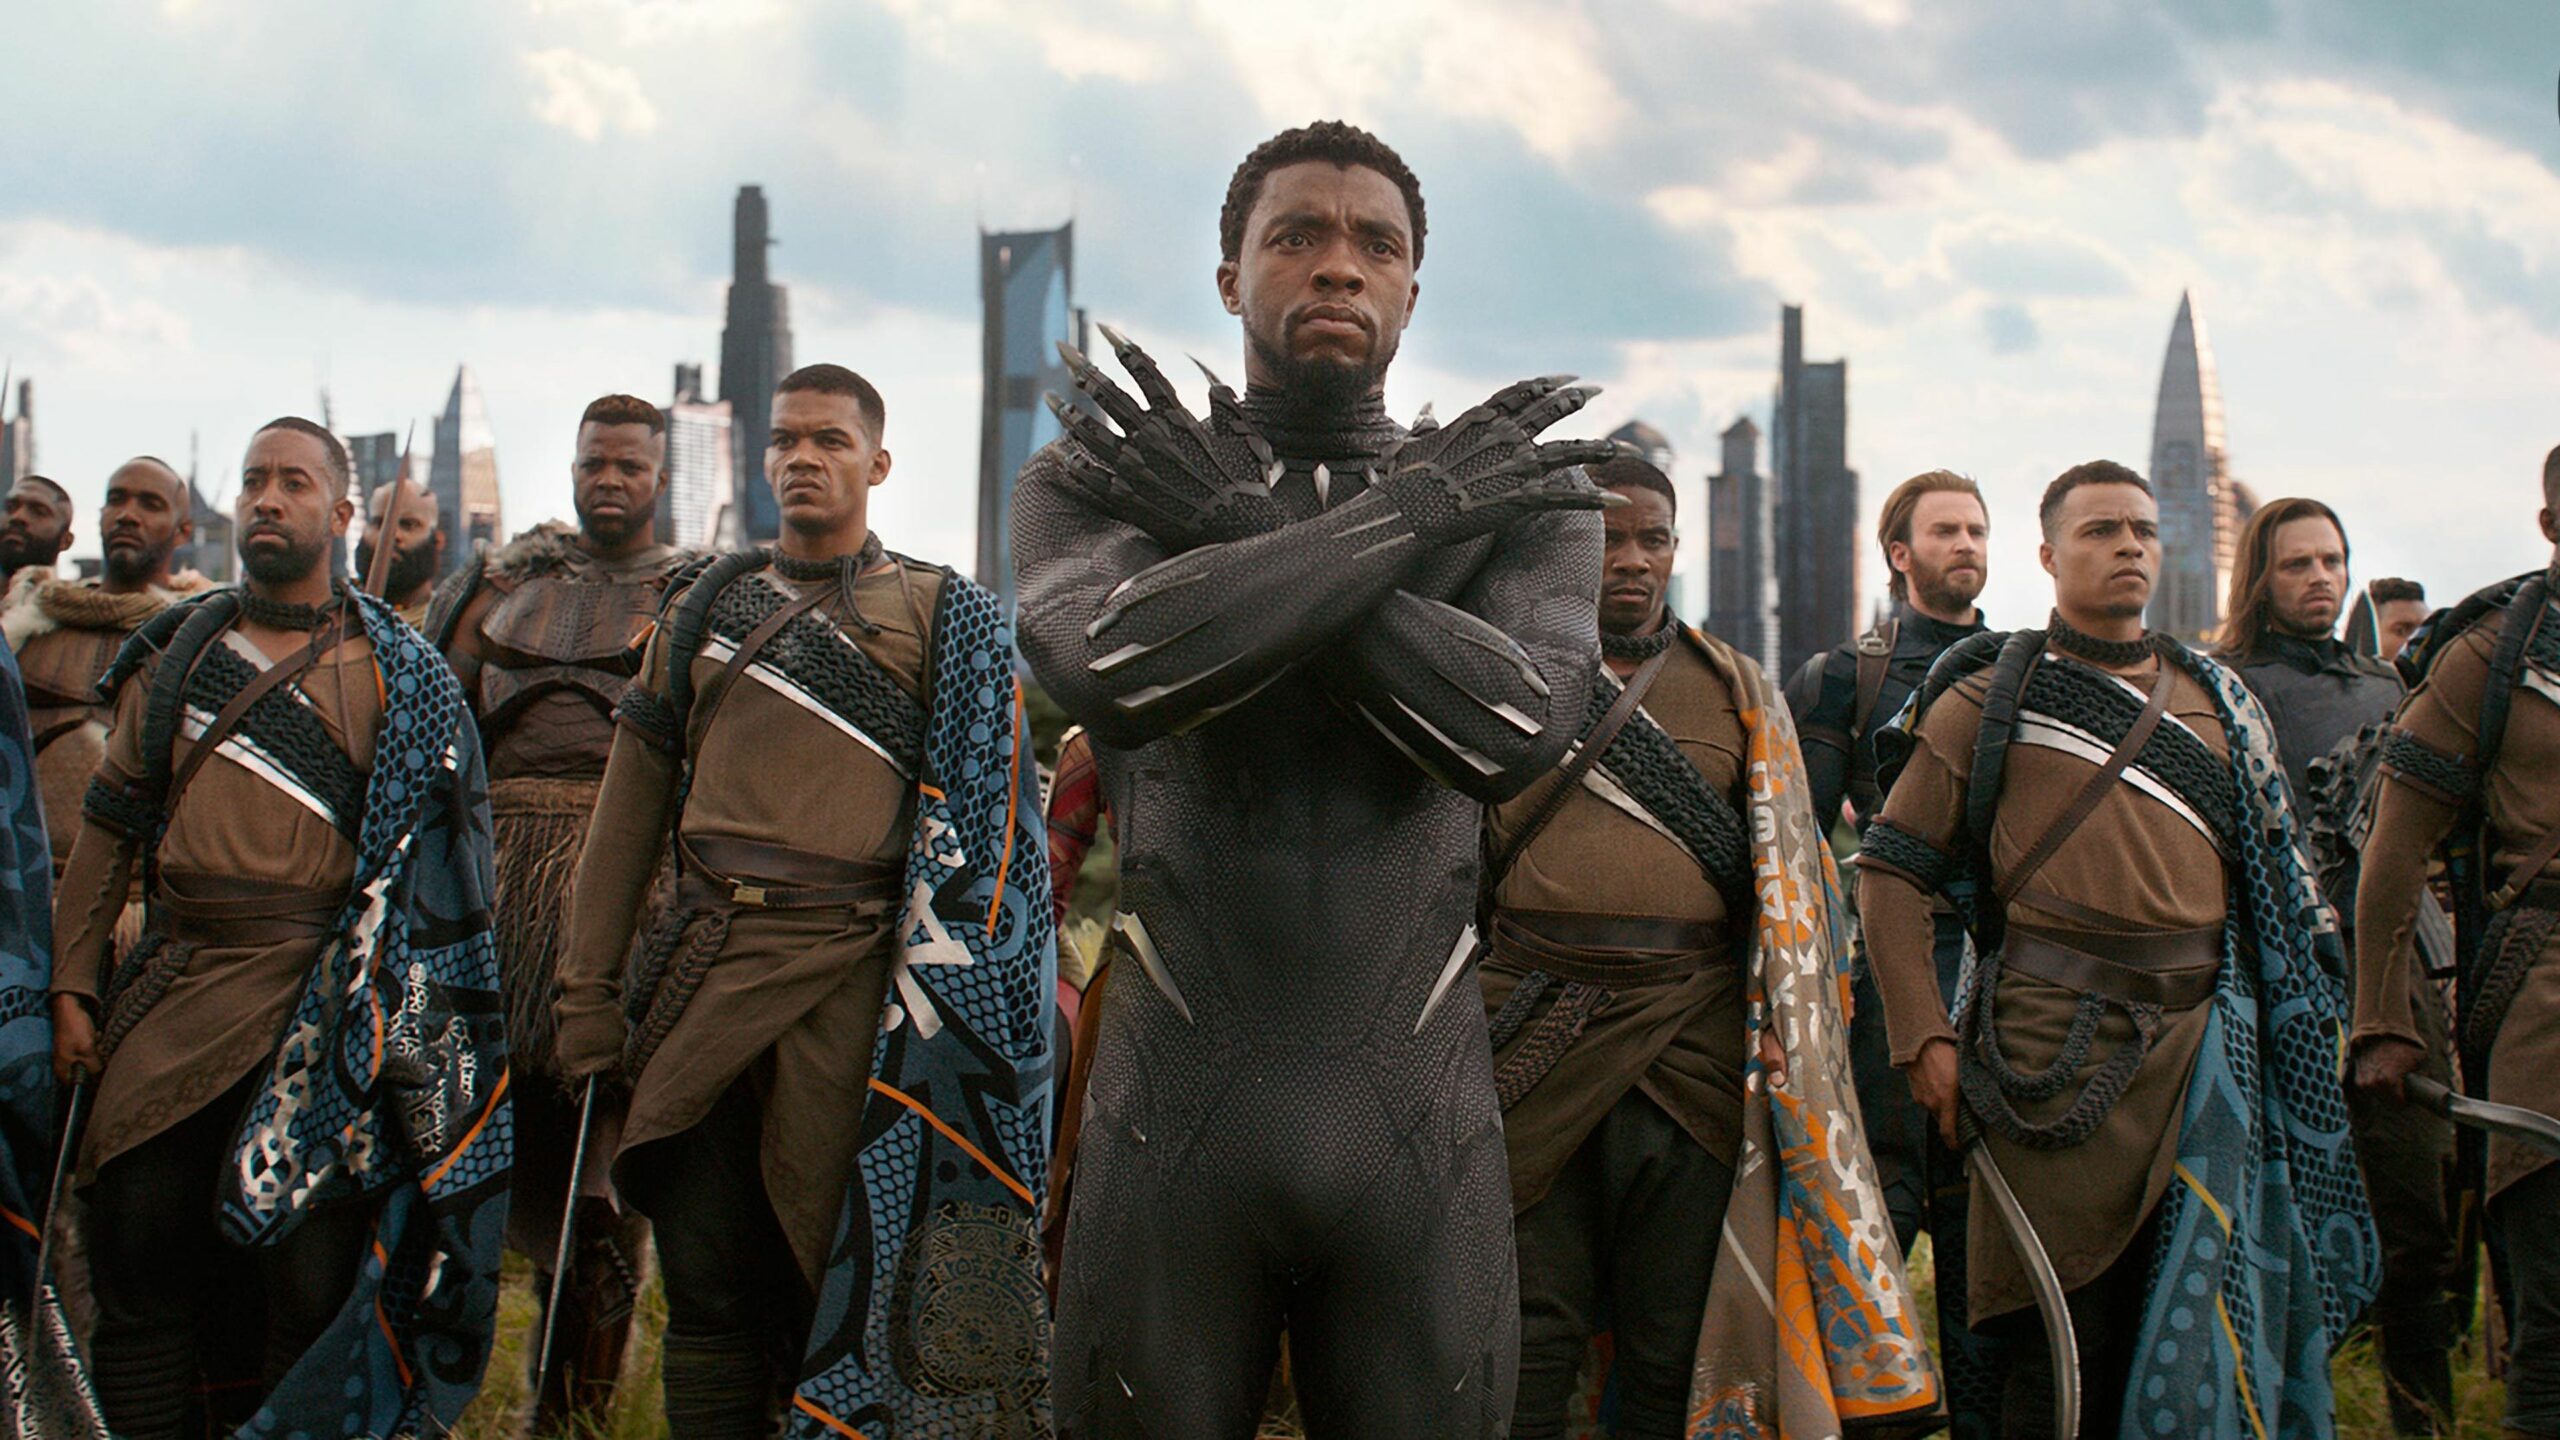 Black Panther Wakanda Forever release date: Tribute to Chadwick Boseman Financial Blog